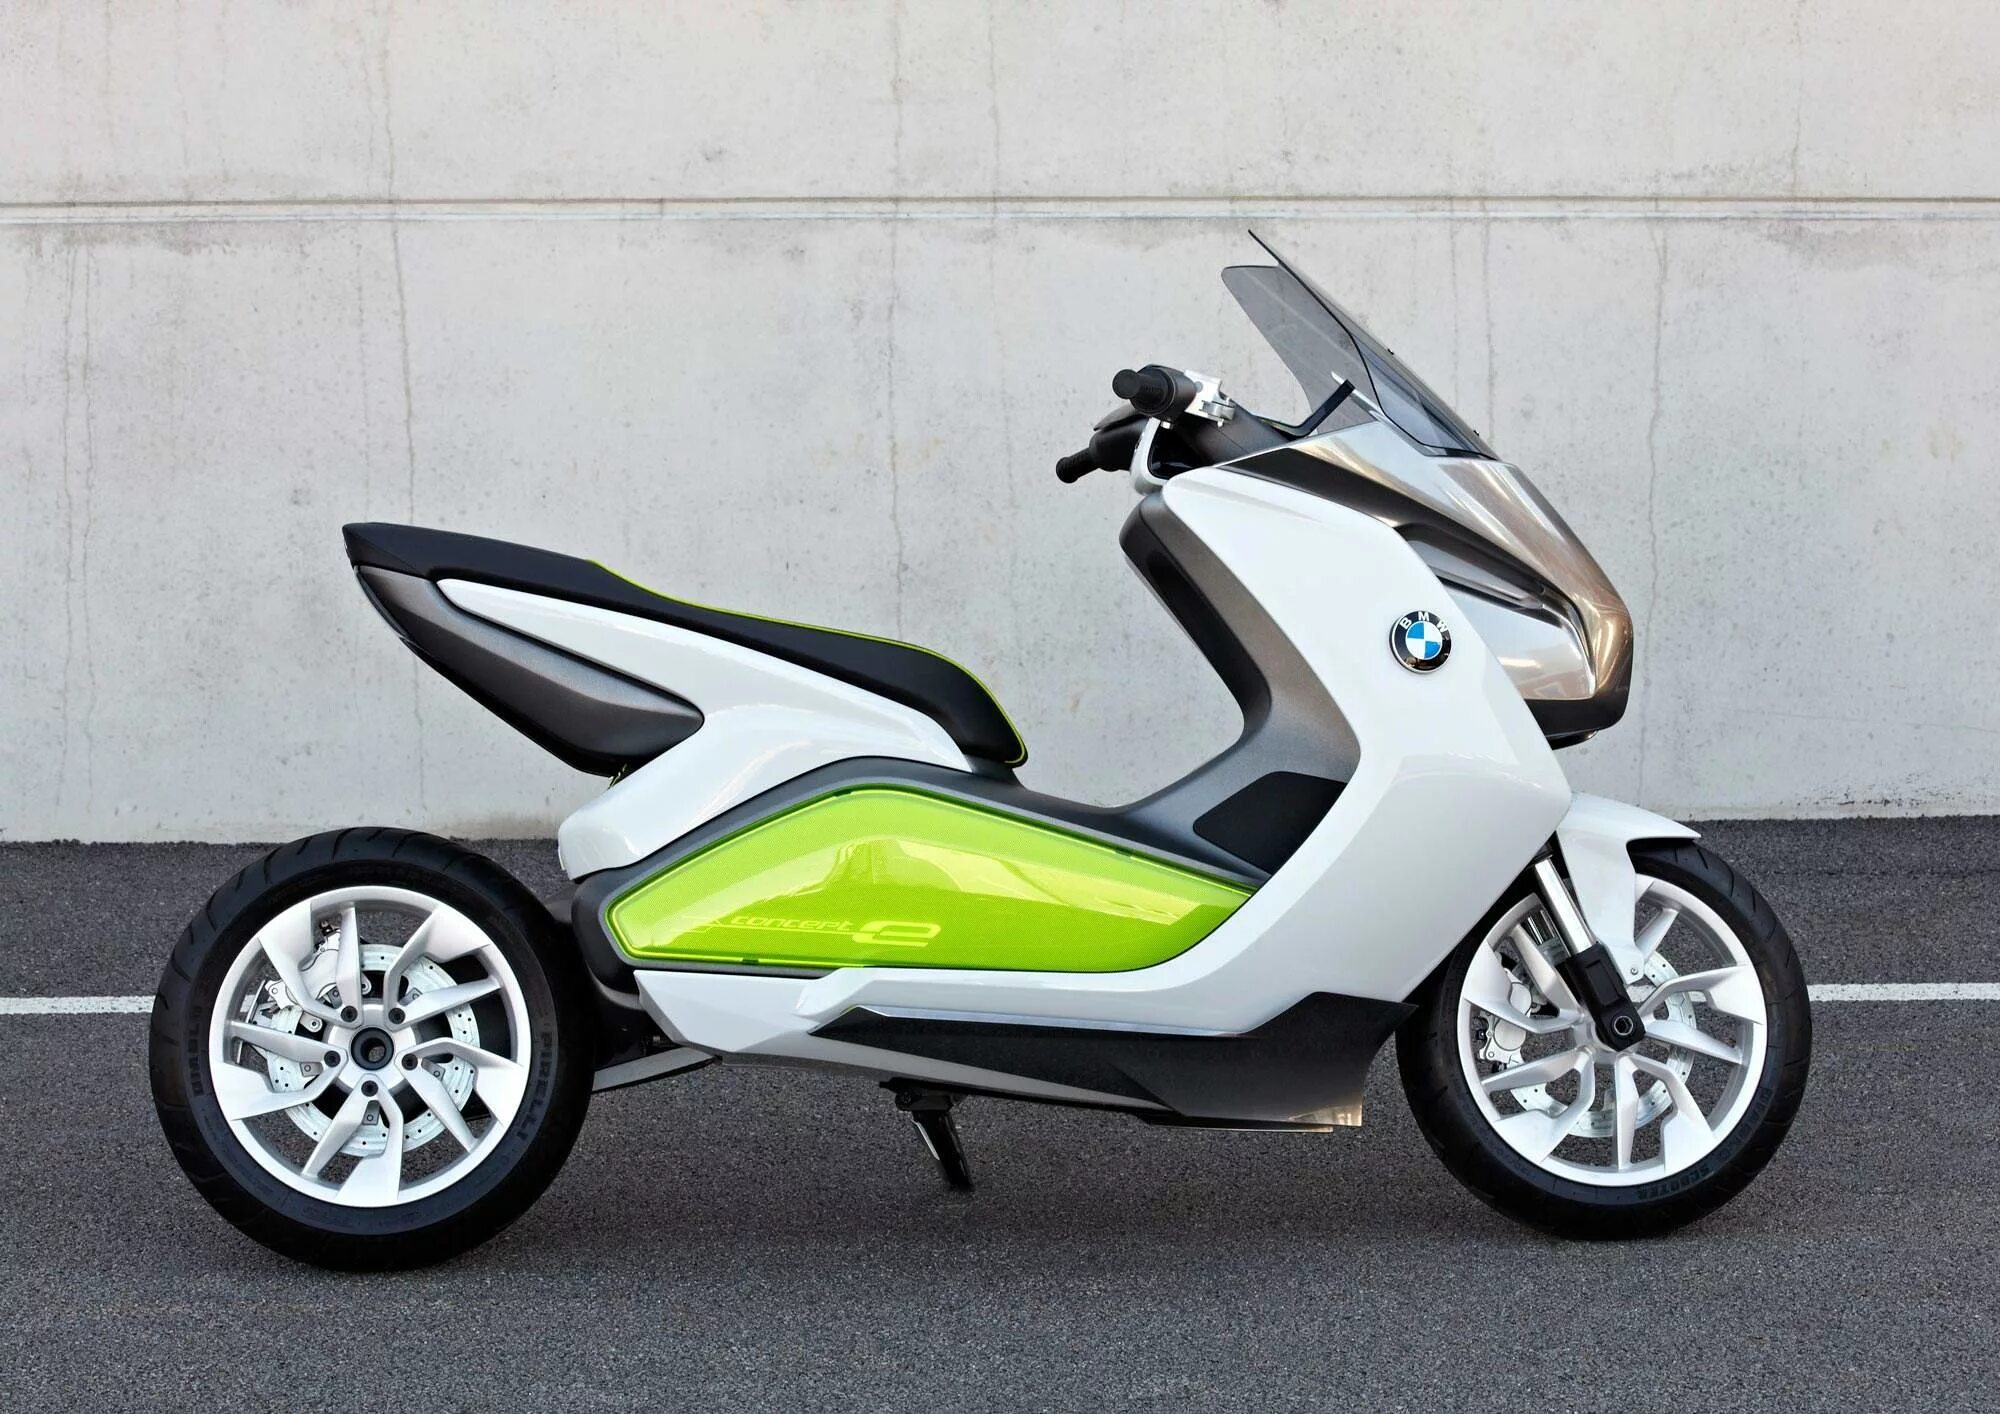 Скутер BMW 50cc. BMW Motorrad скутер. Скутер BMW 50cc утка. BMW Electric Scooter. Популярный скутер